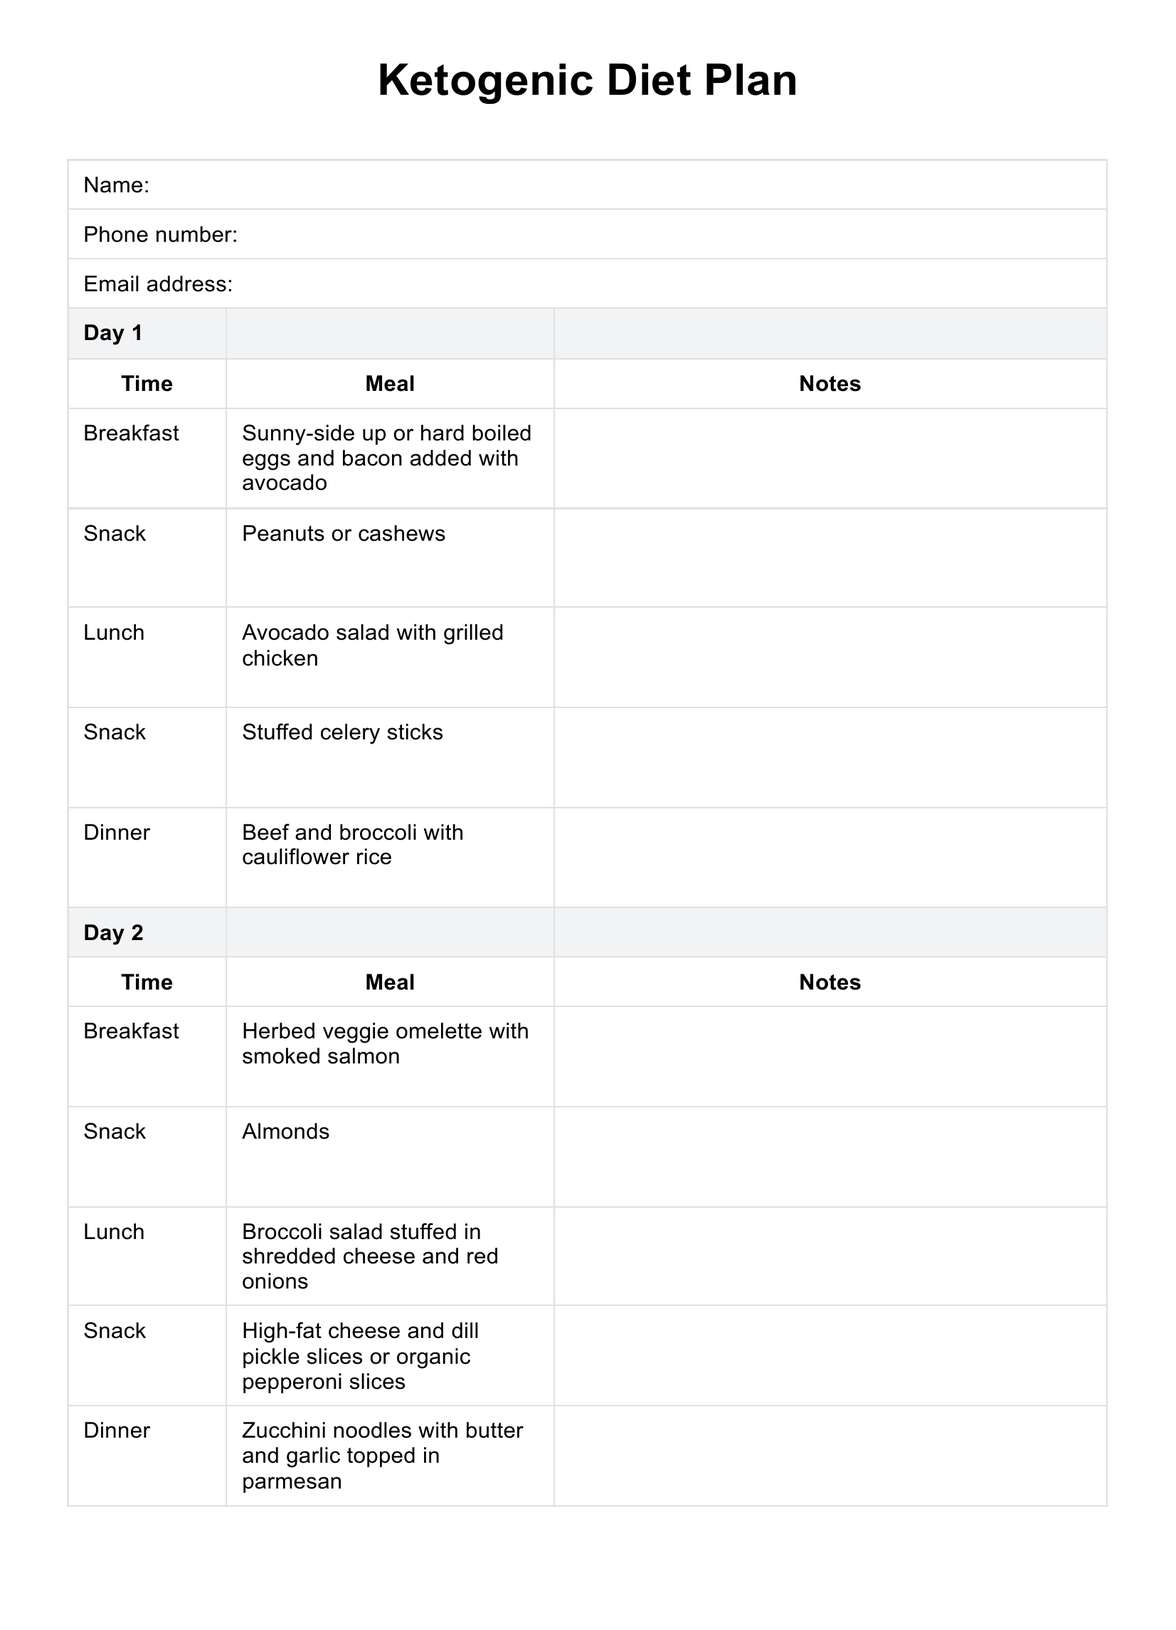 Ketogenic Diet Plan PDF Example